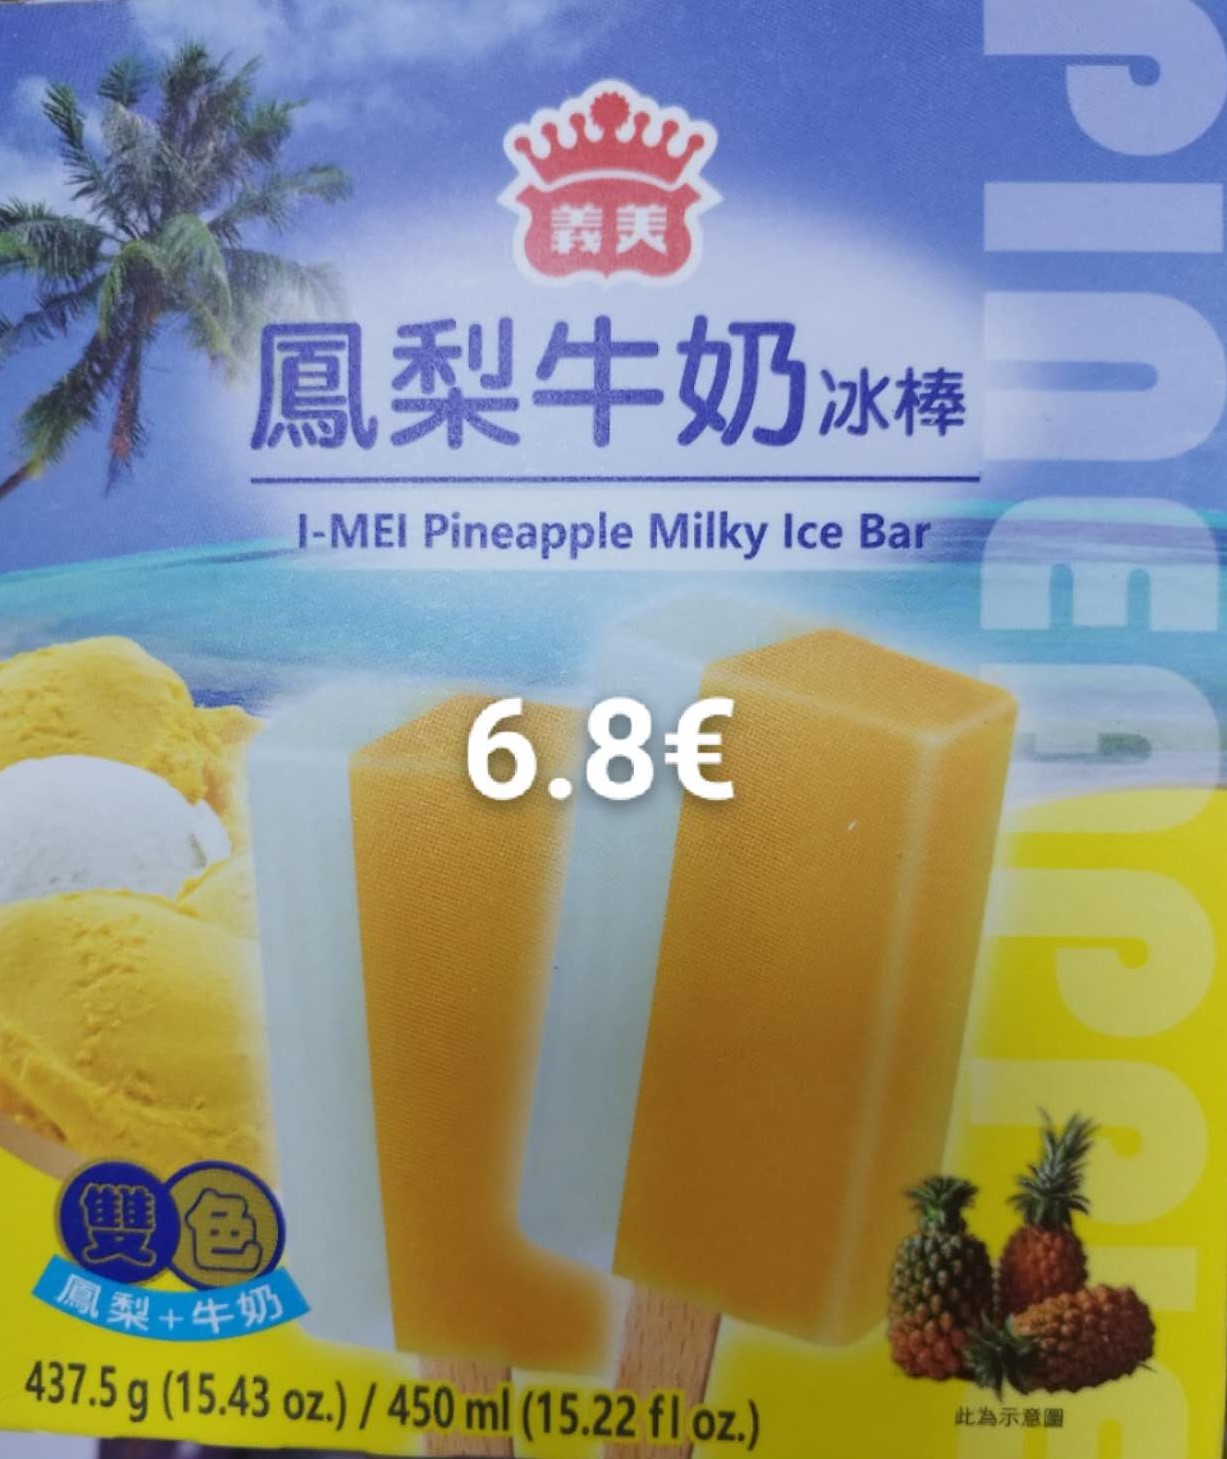 Pineapple Milky Ice Bar